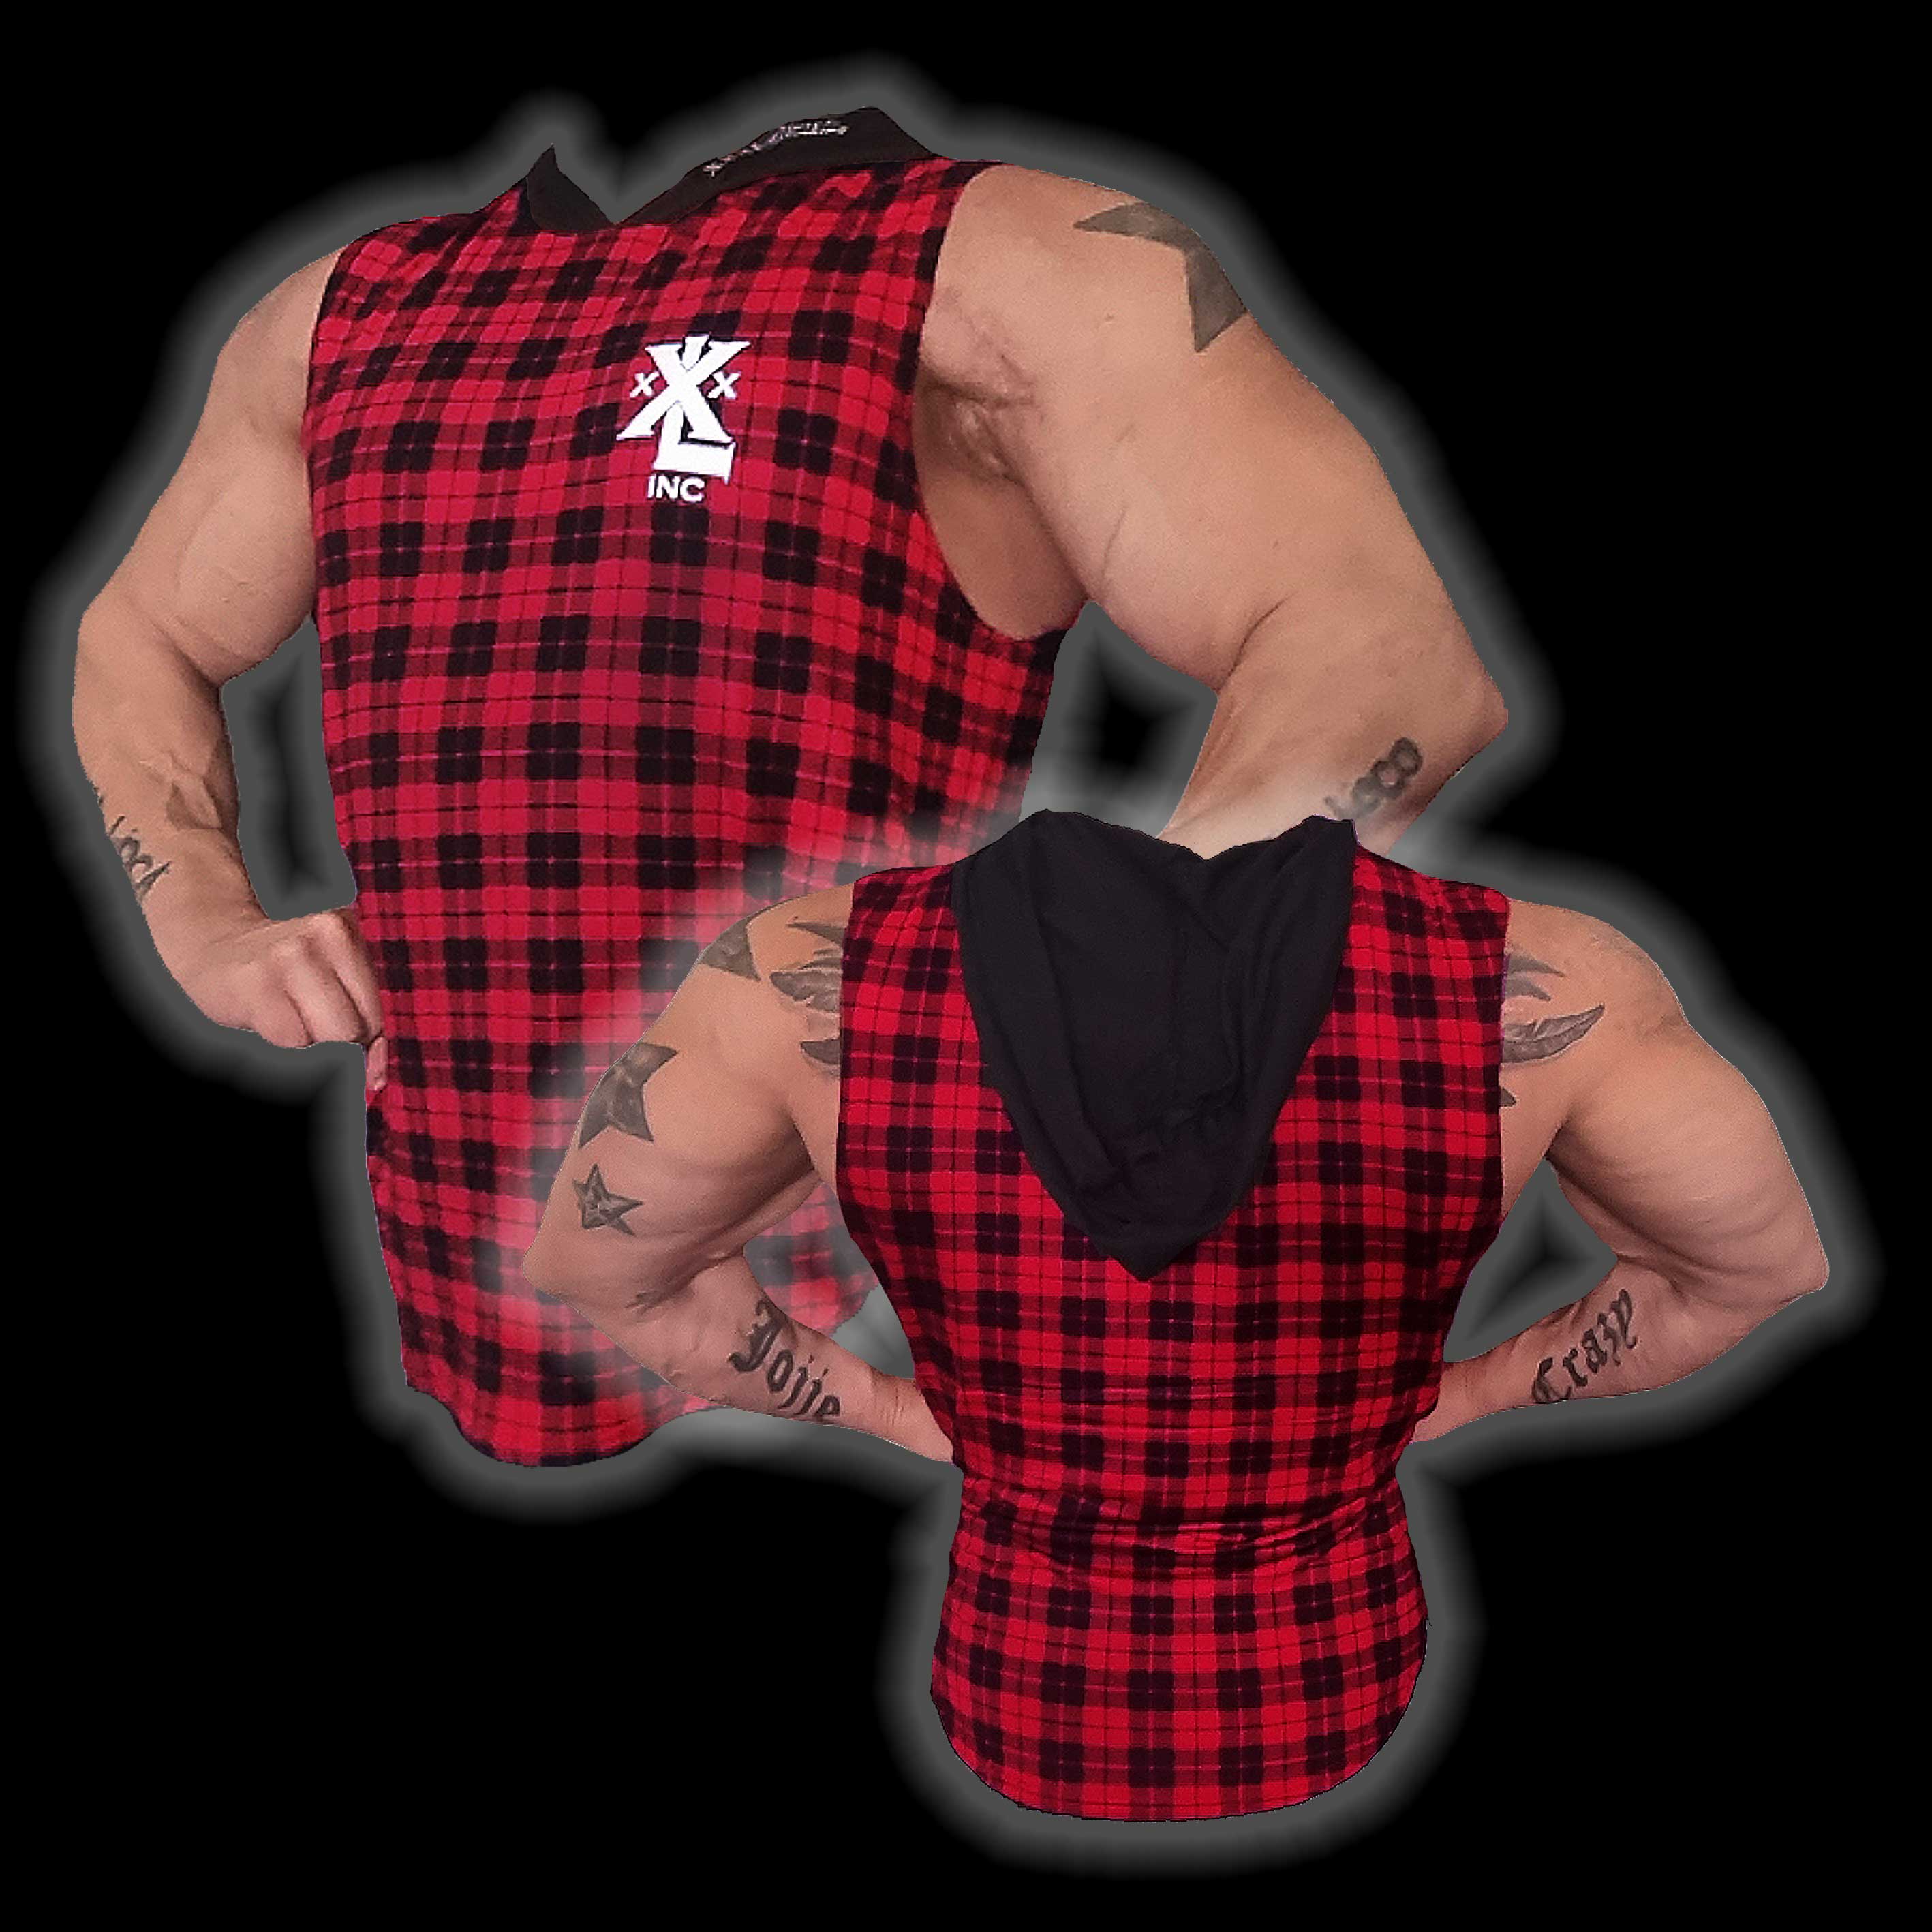 "XXXL Inc" Hooded Muscle Cut T - Red/Black Plaid